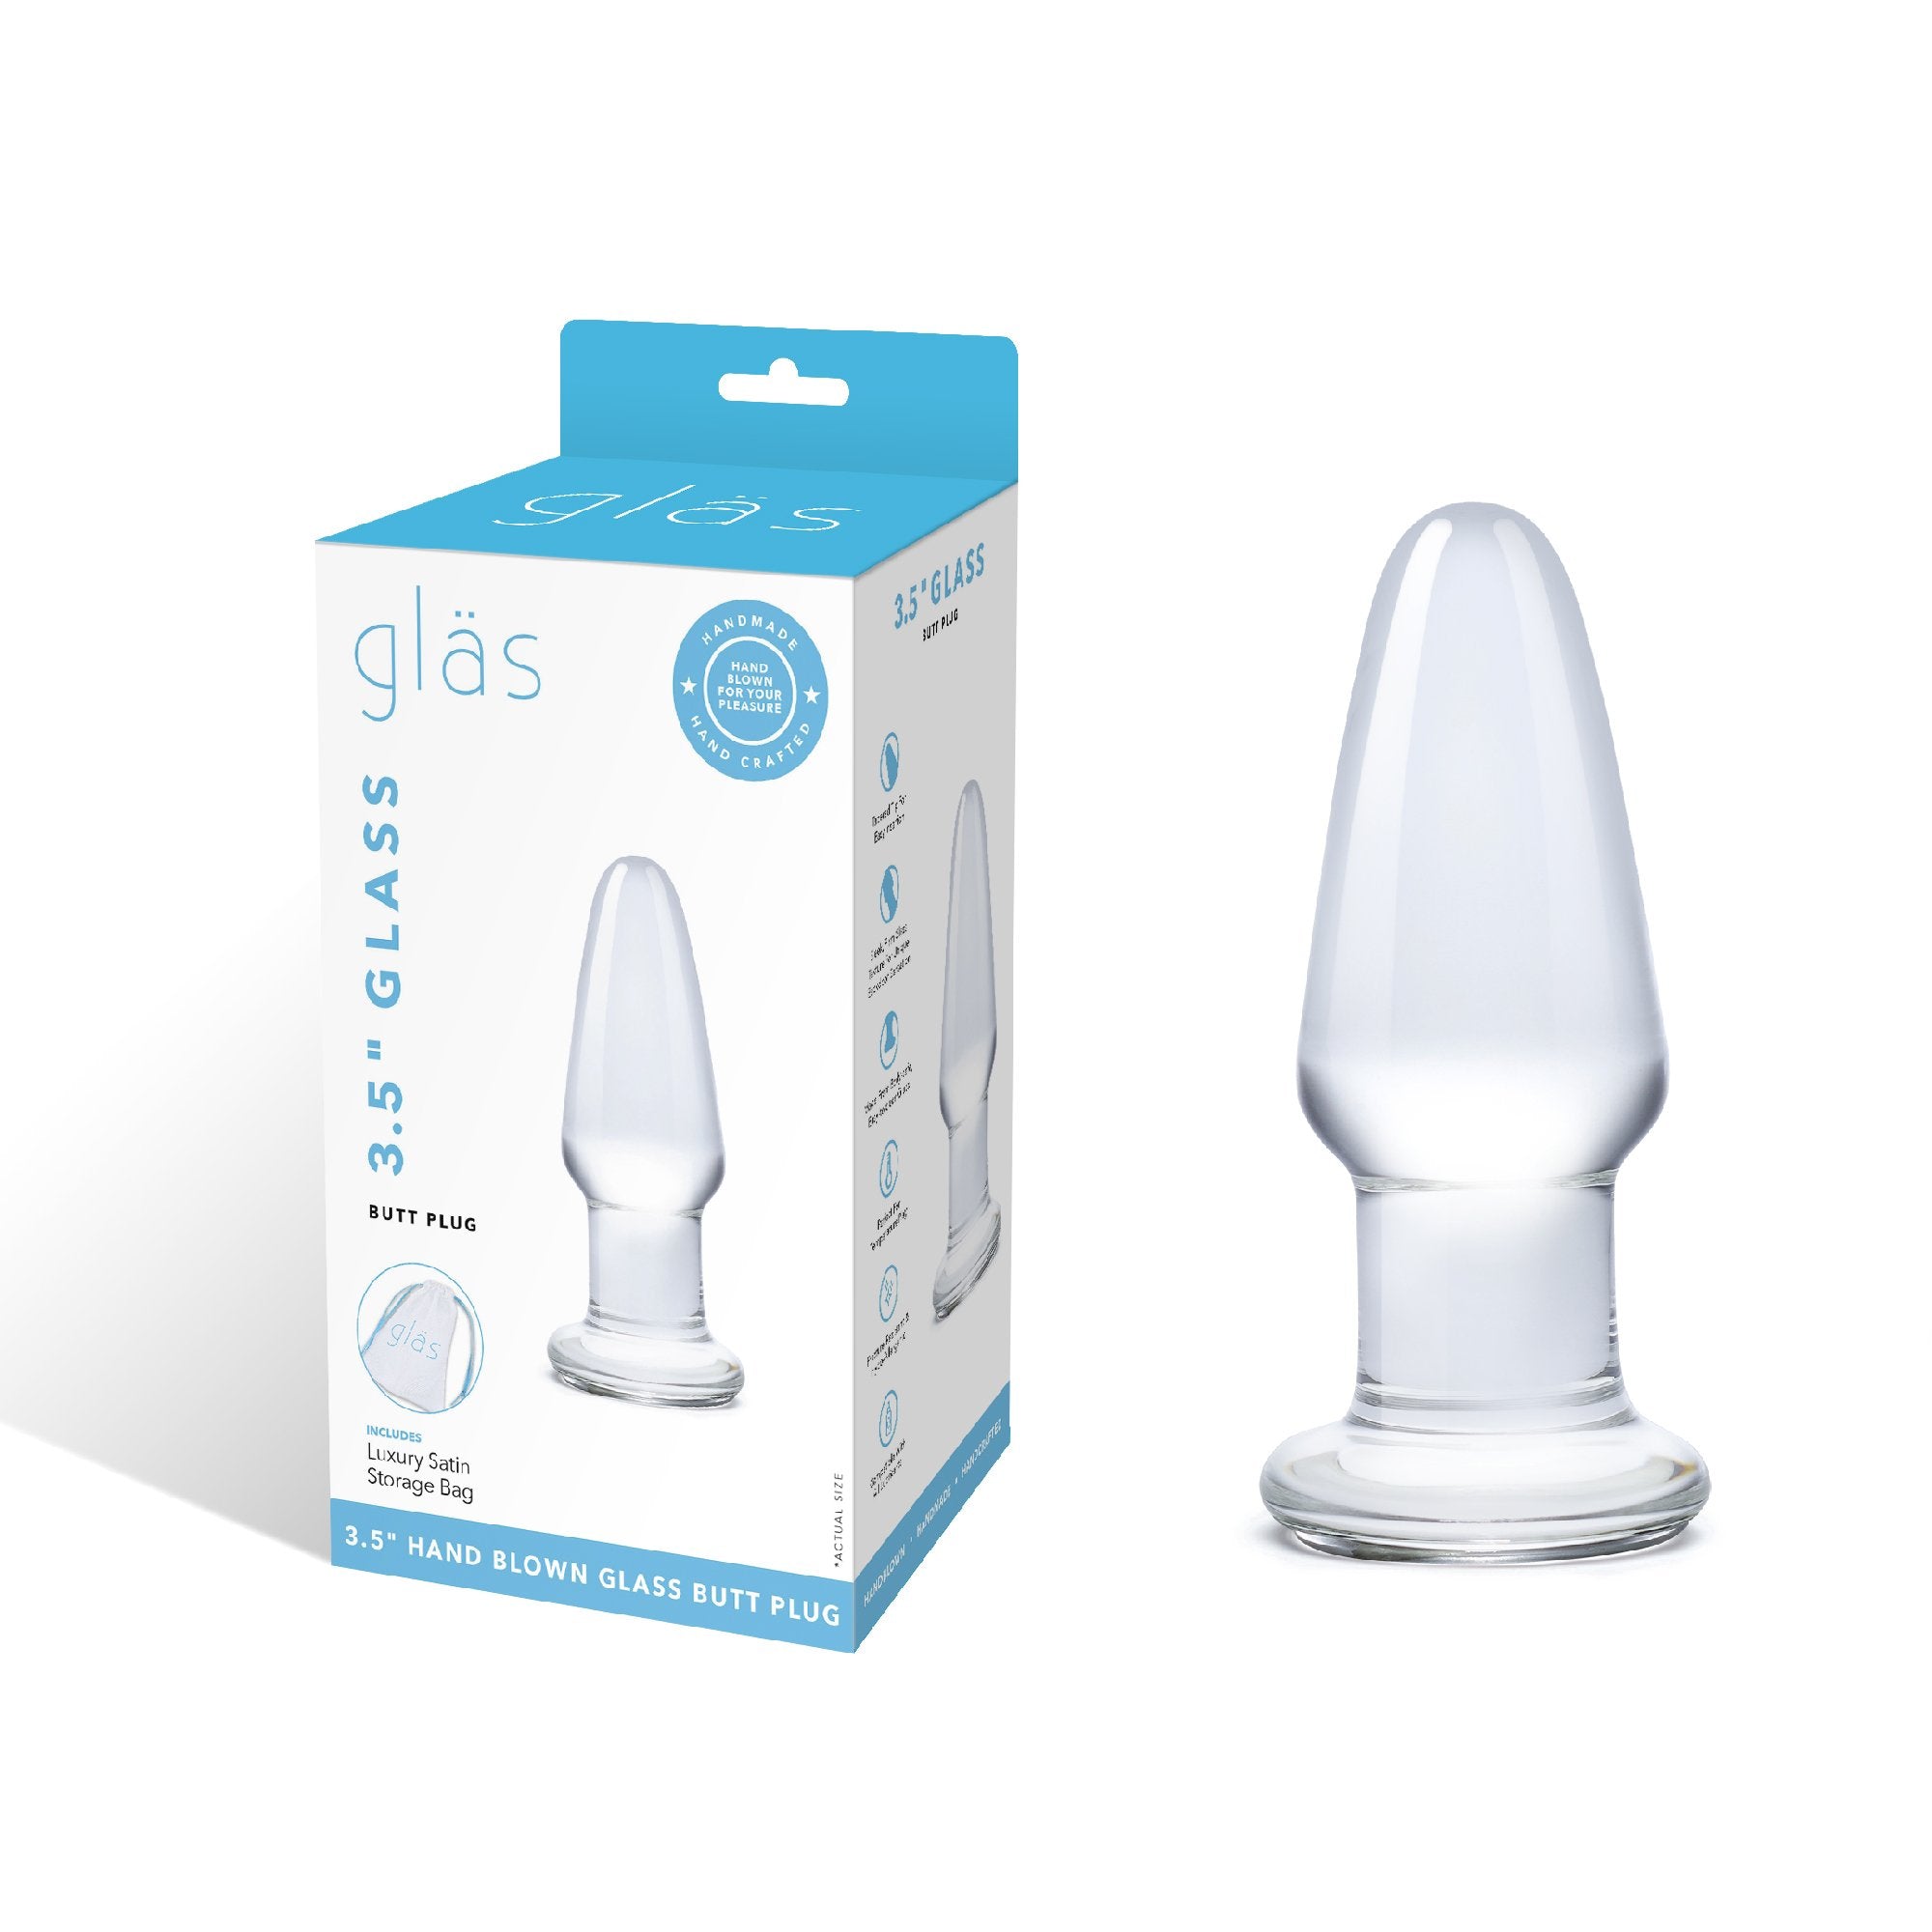 Packaging of the Gläs 3.5 inch Glass Butt Plug